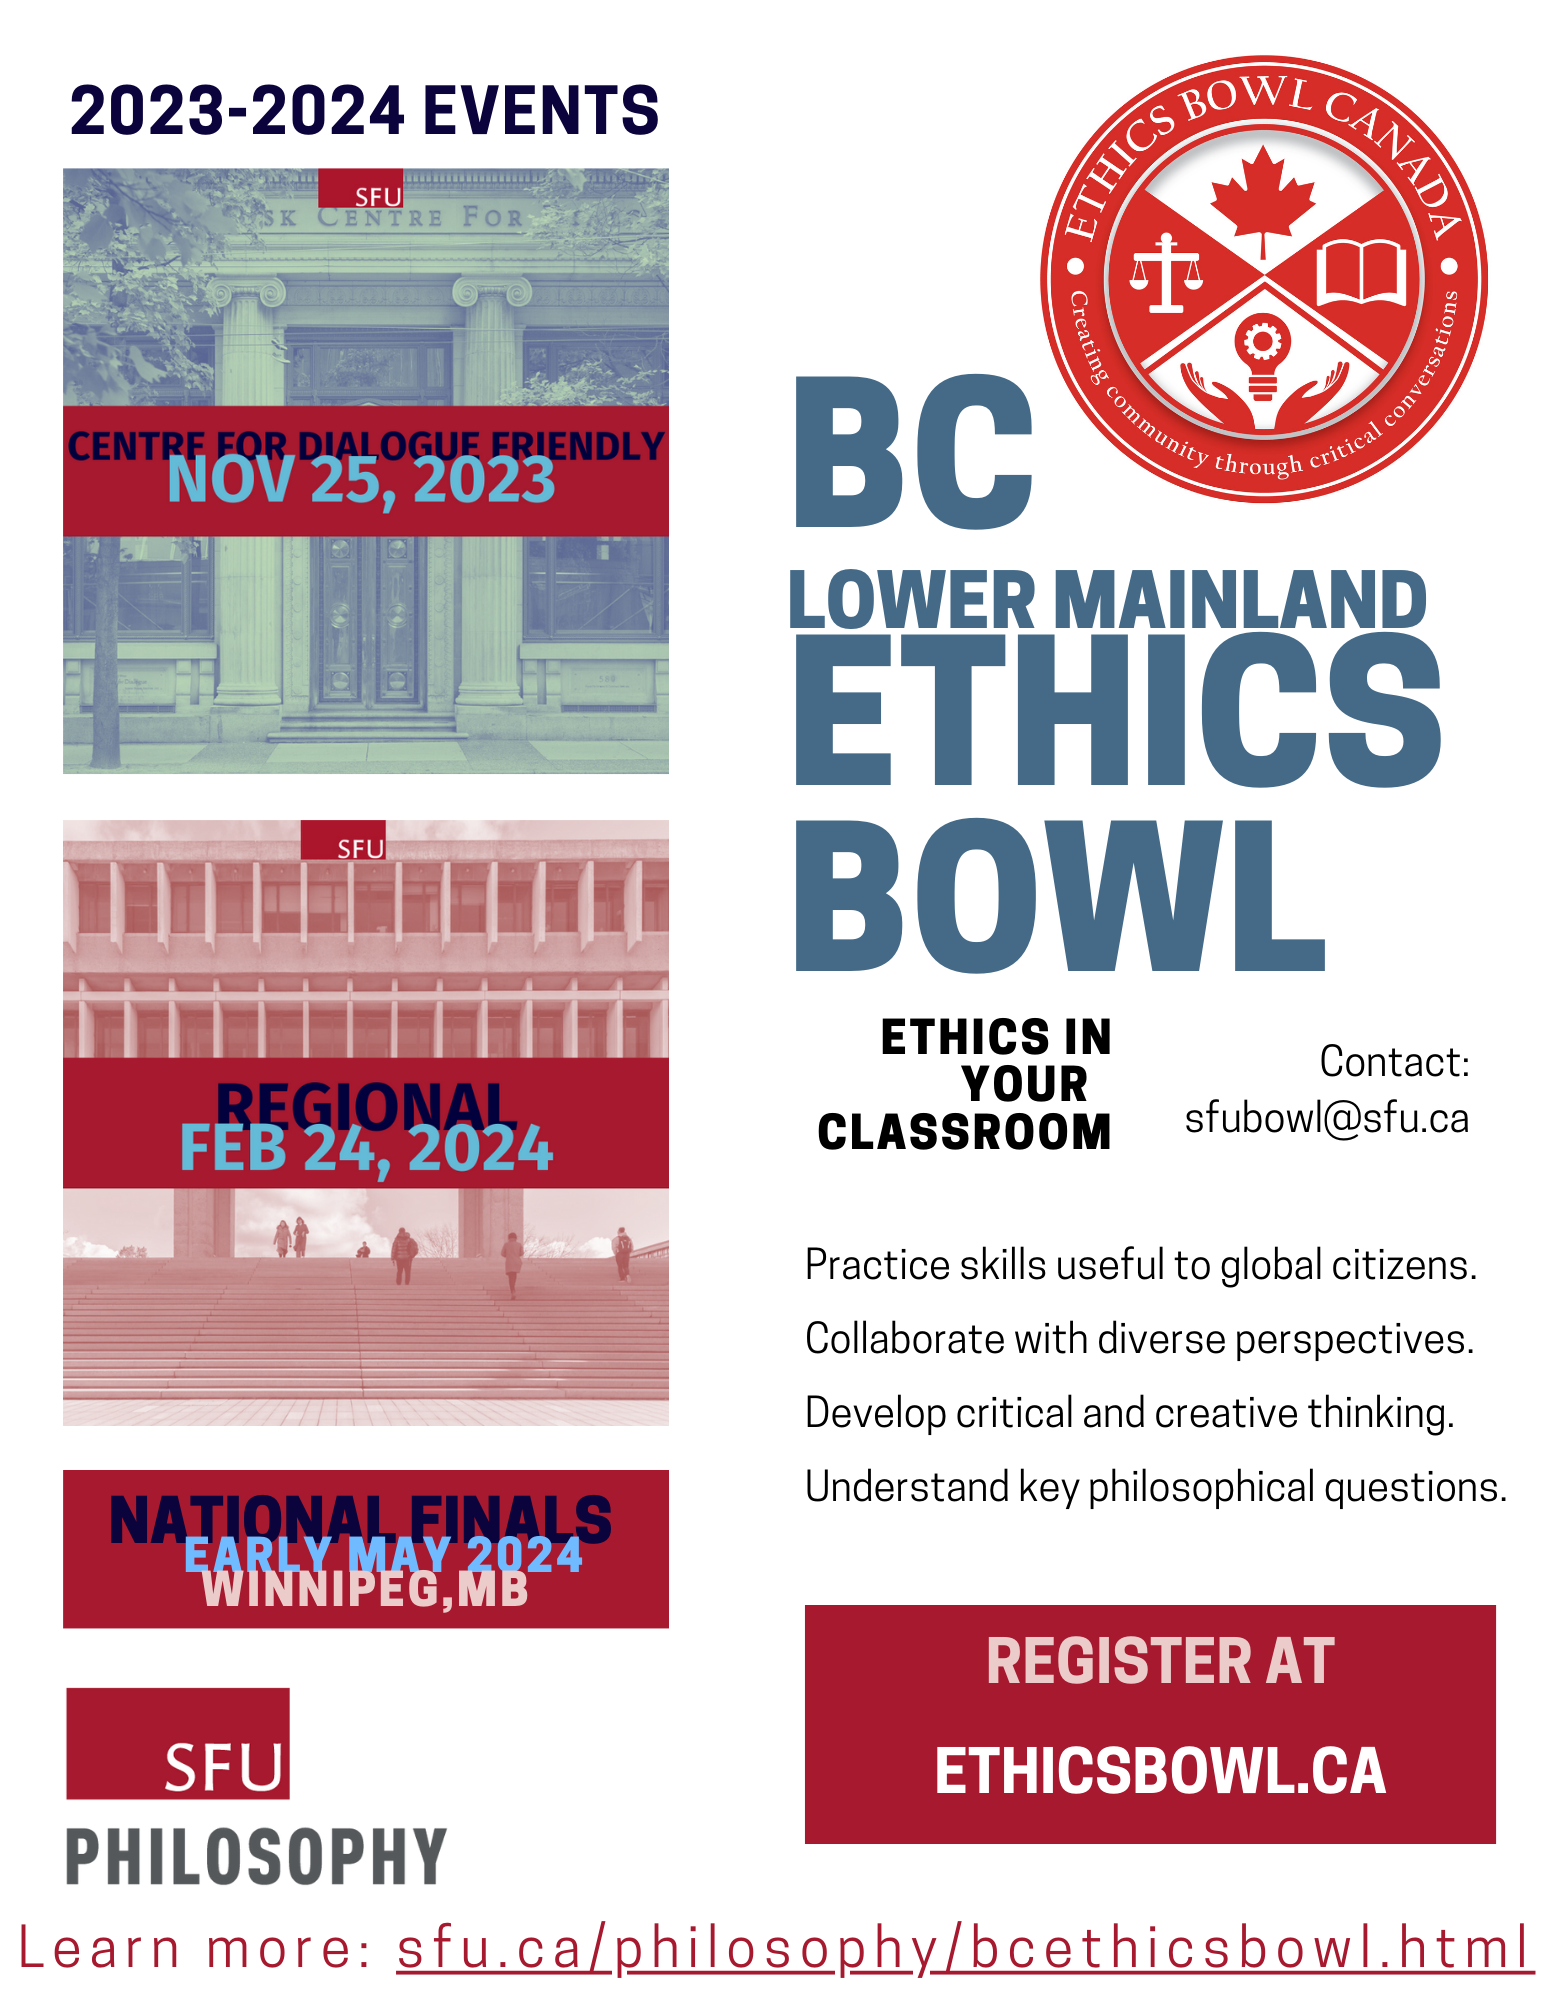 Ethics Bowl Flyer 2021